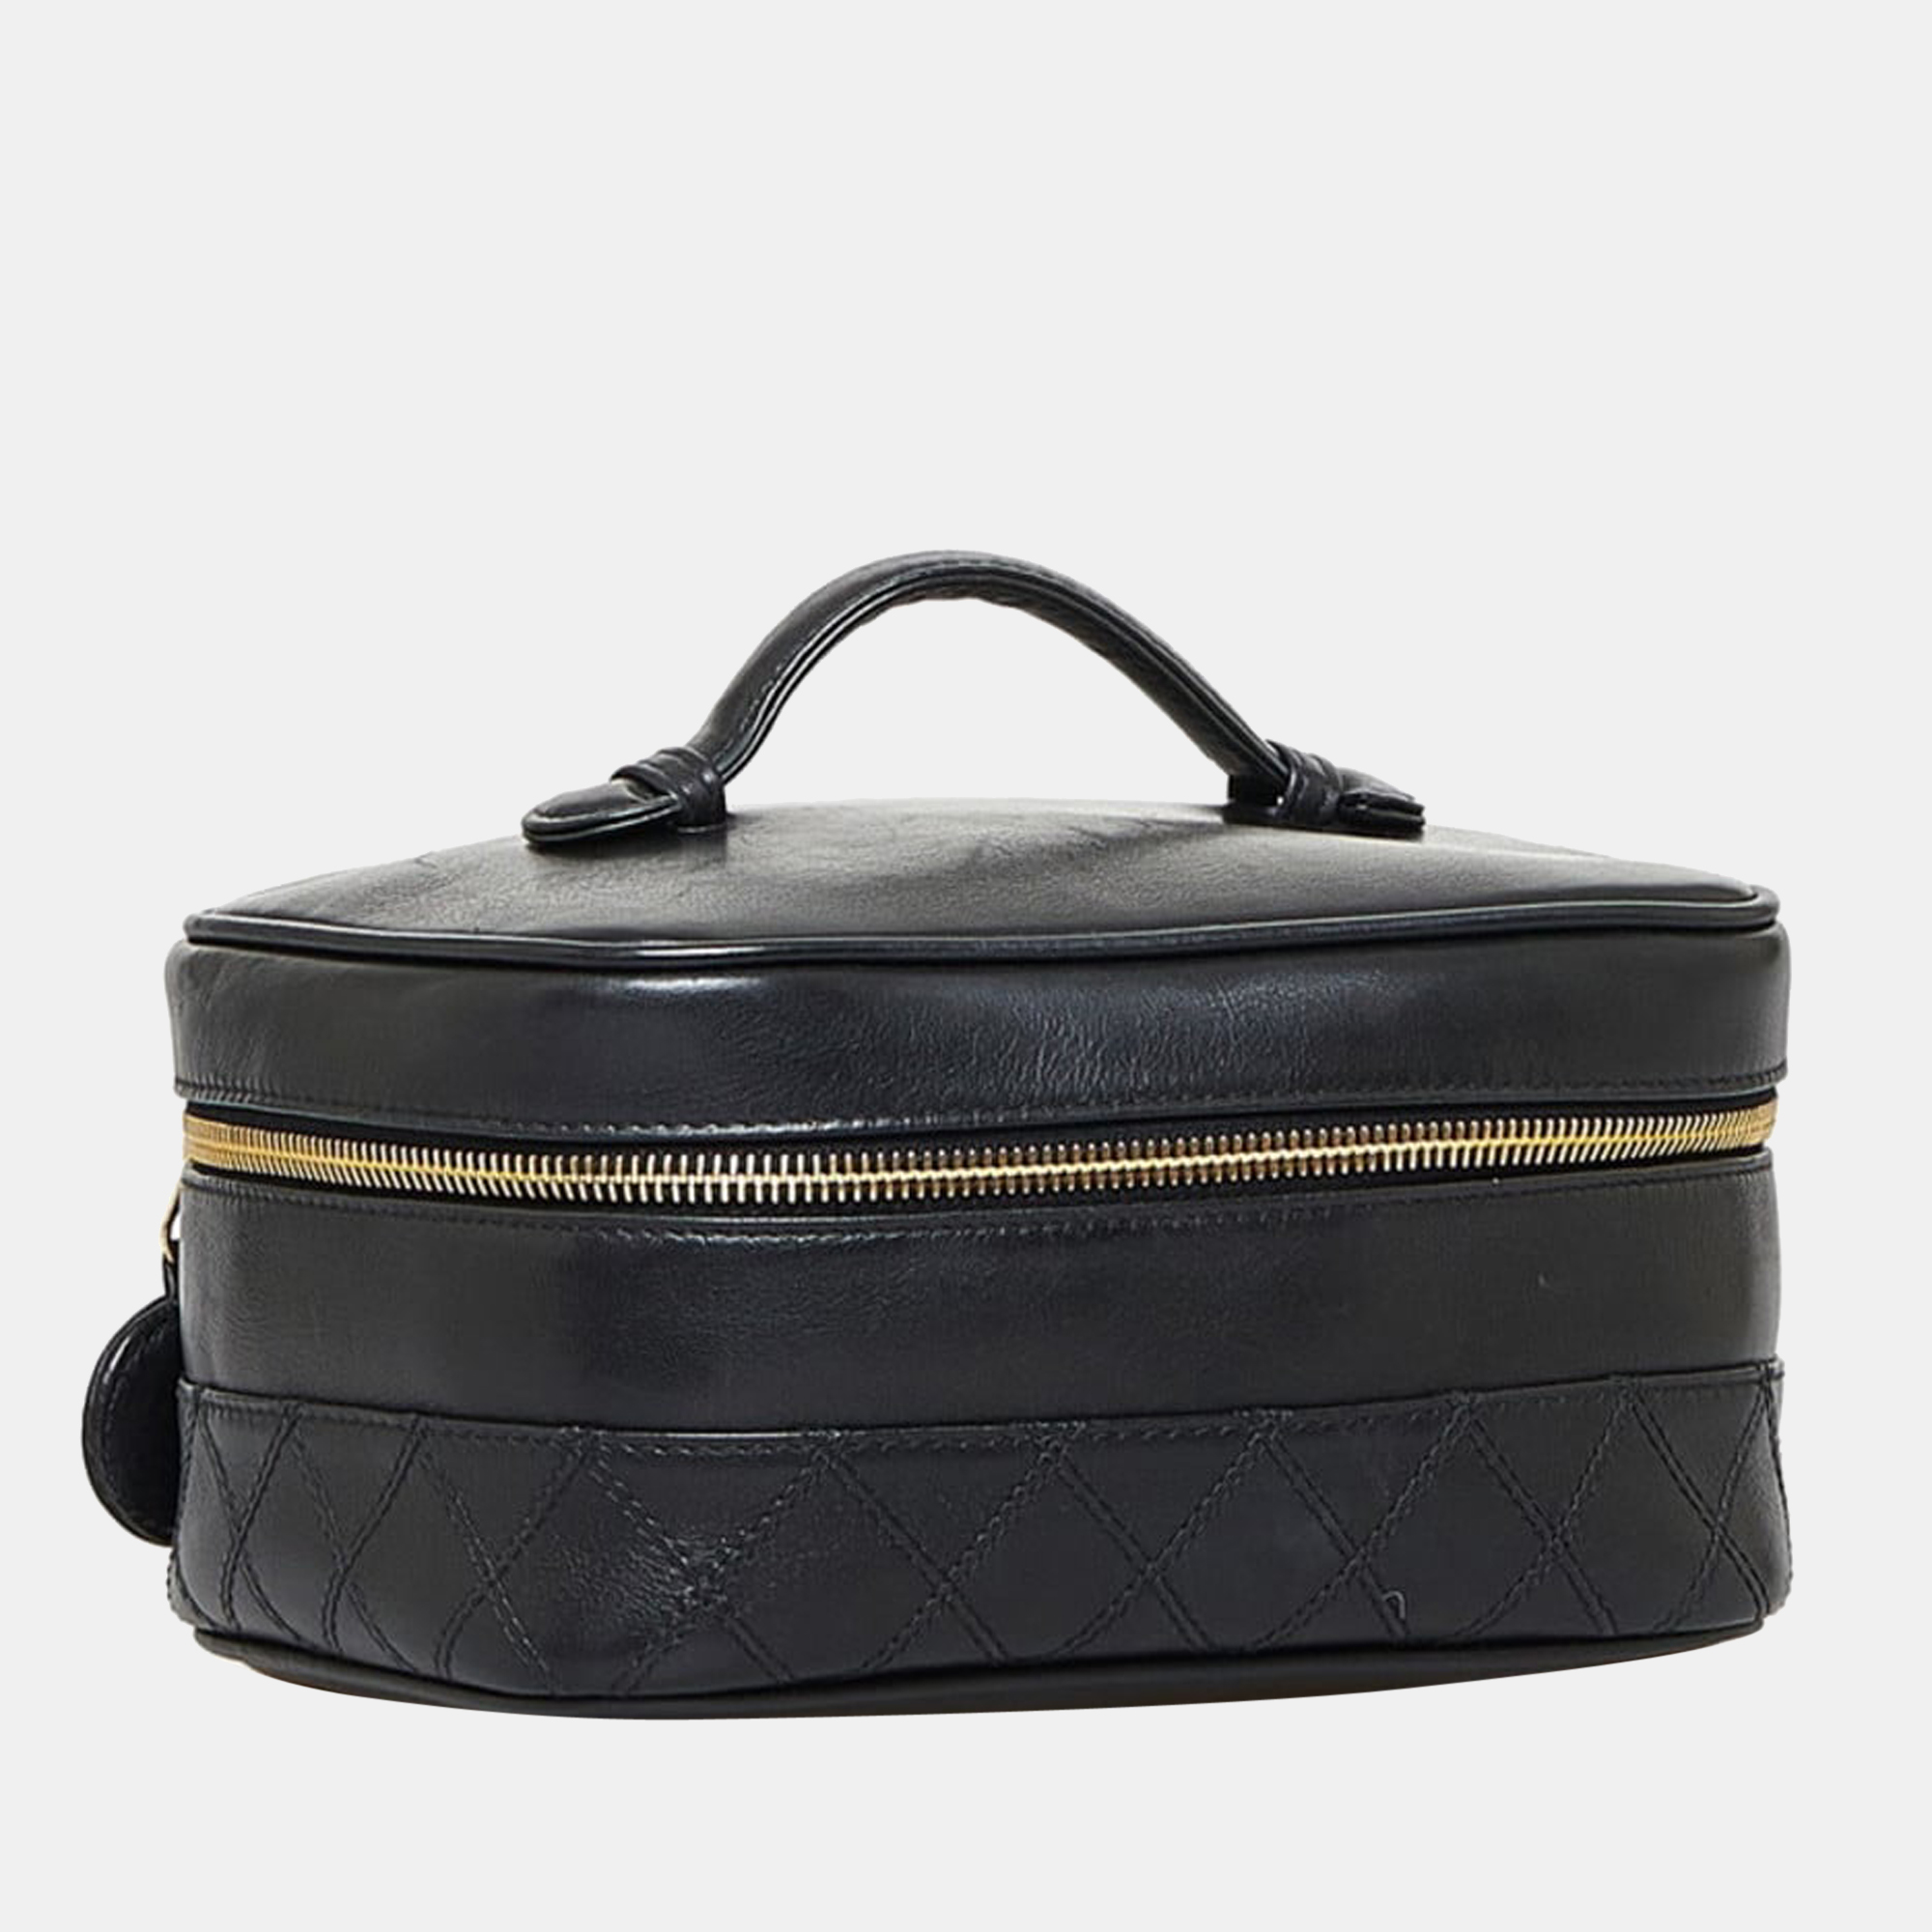 

Chanel Black Leather CC Vanity Case Clutch Bag